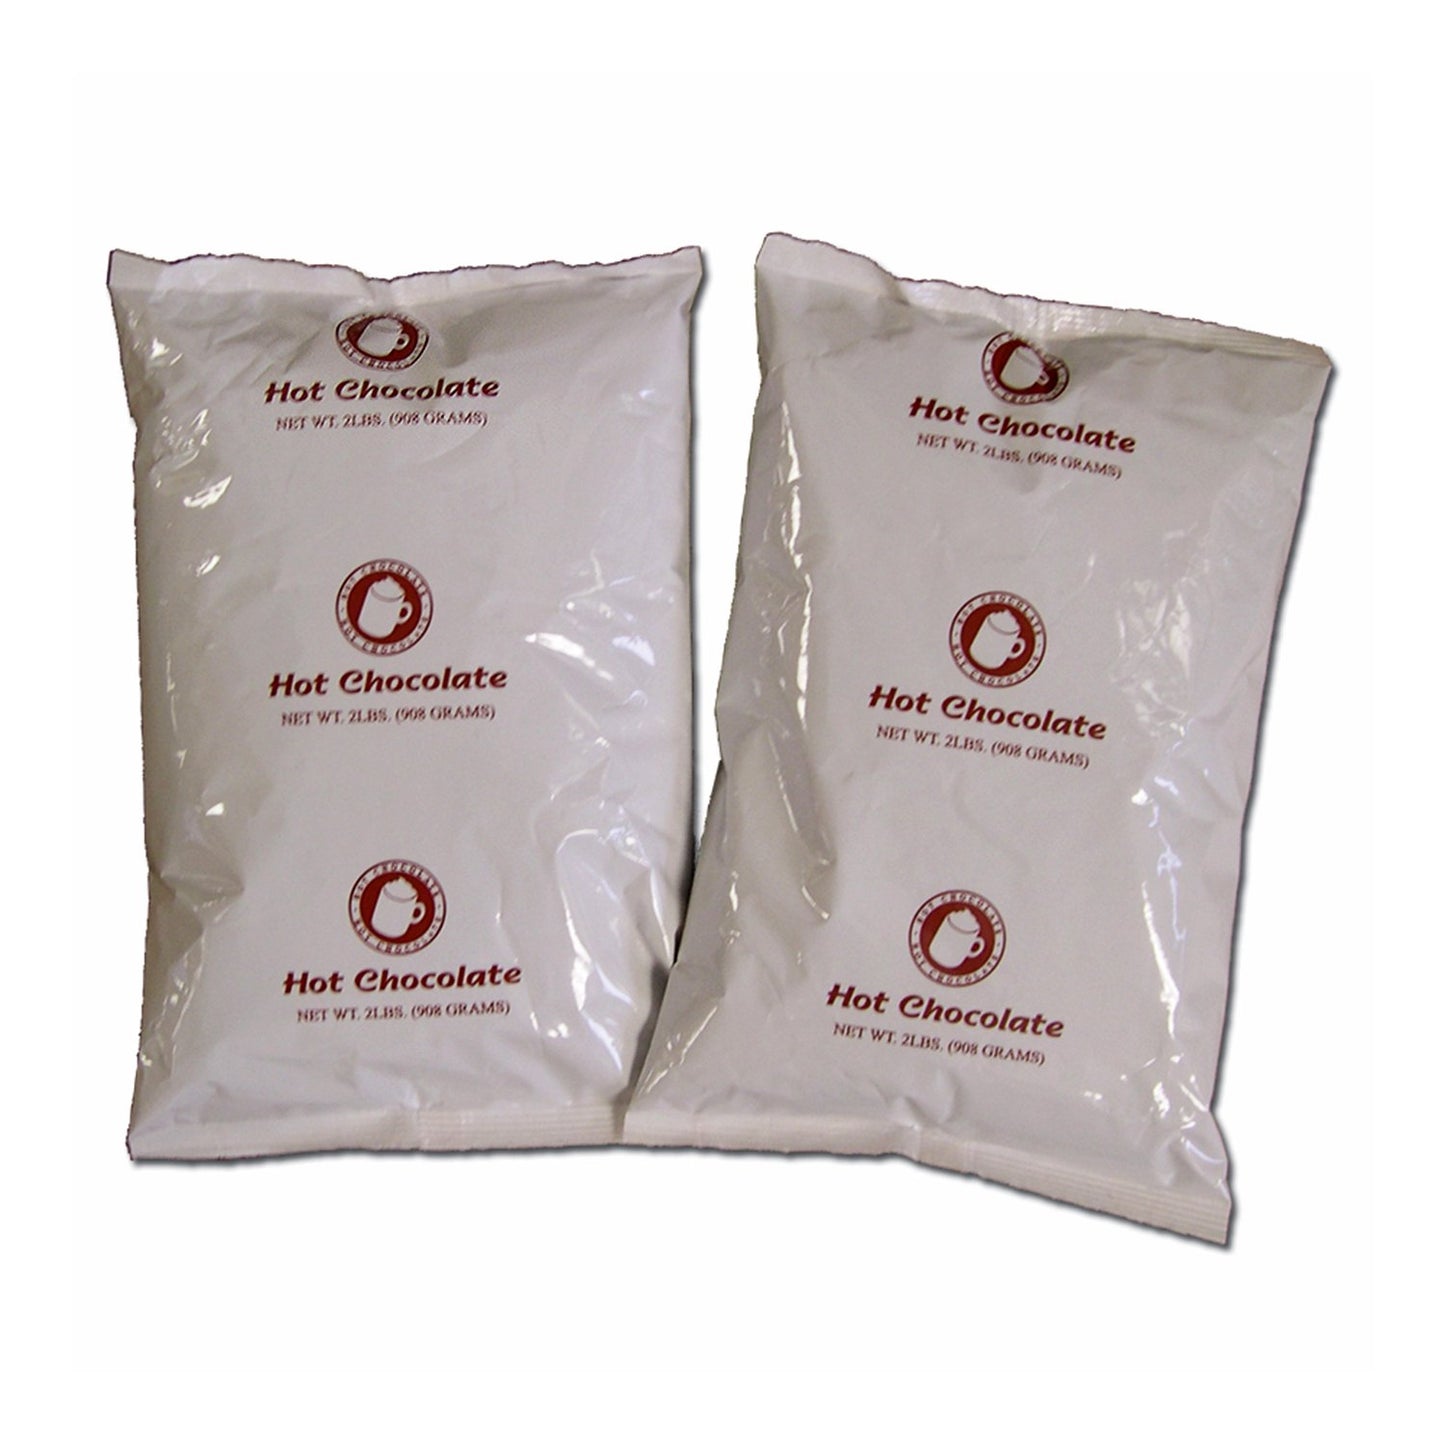 Paramount Coffee Company Hot Chocolate - 12 CT - 2 LB Bags